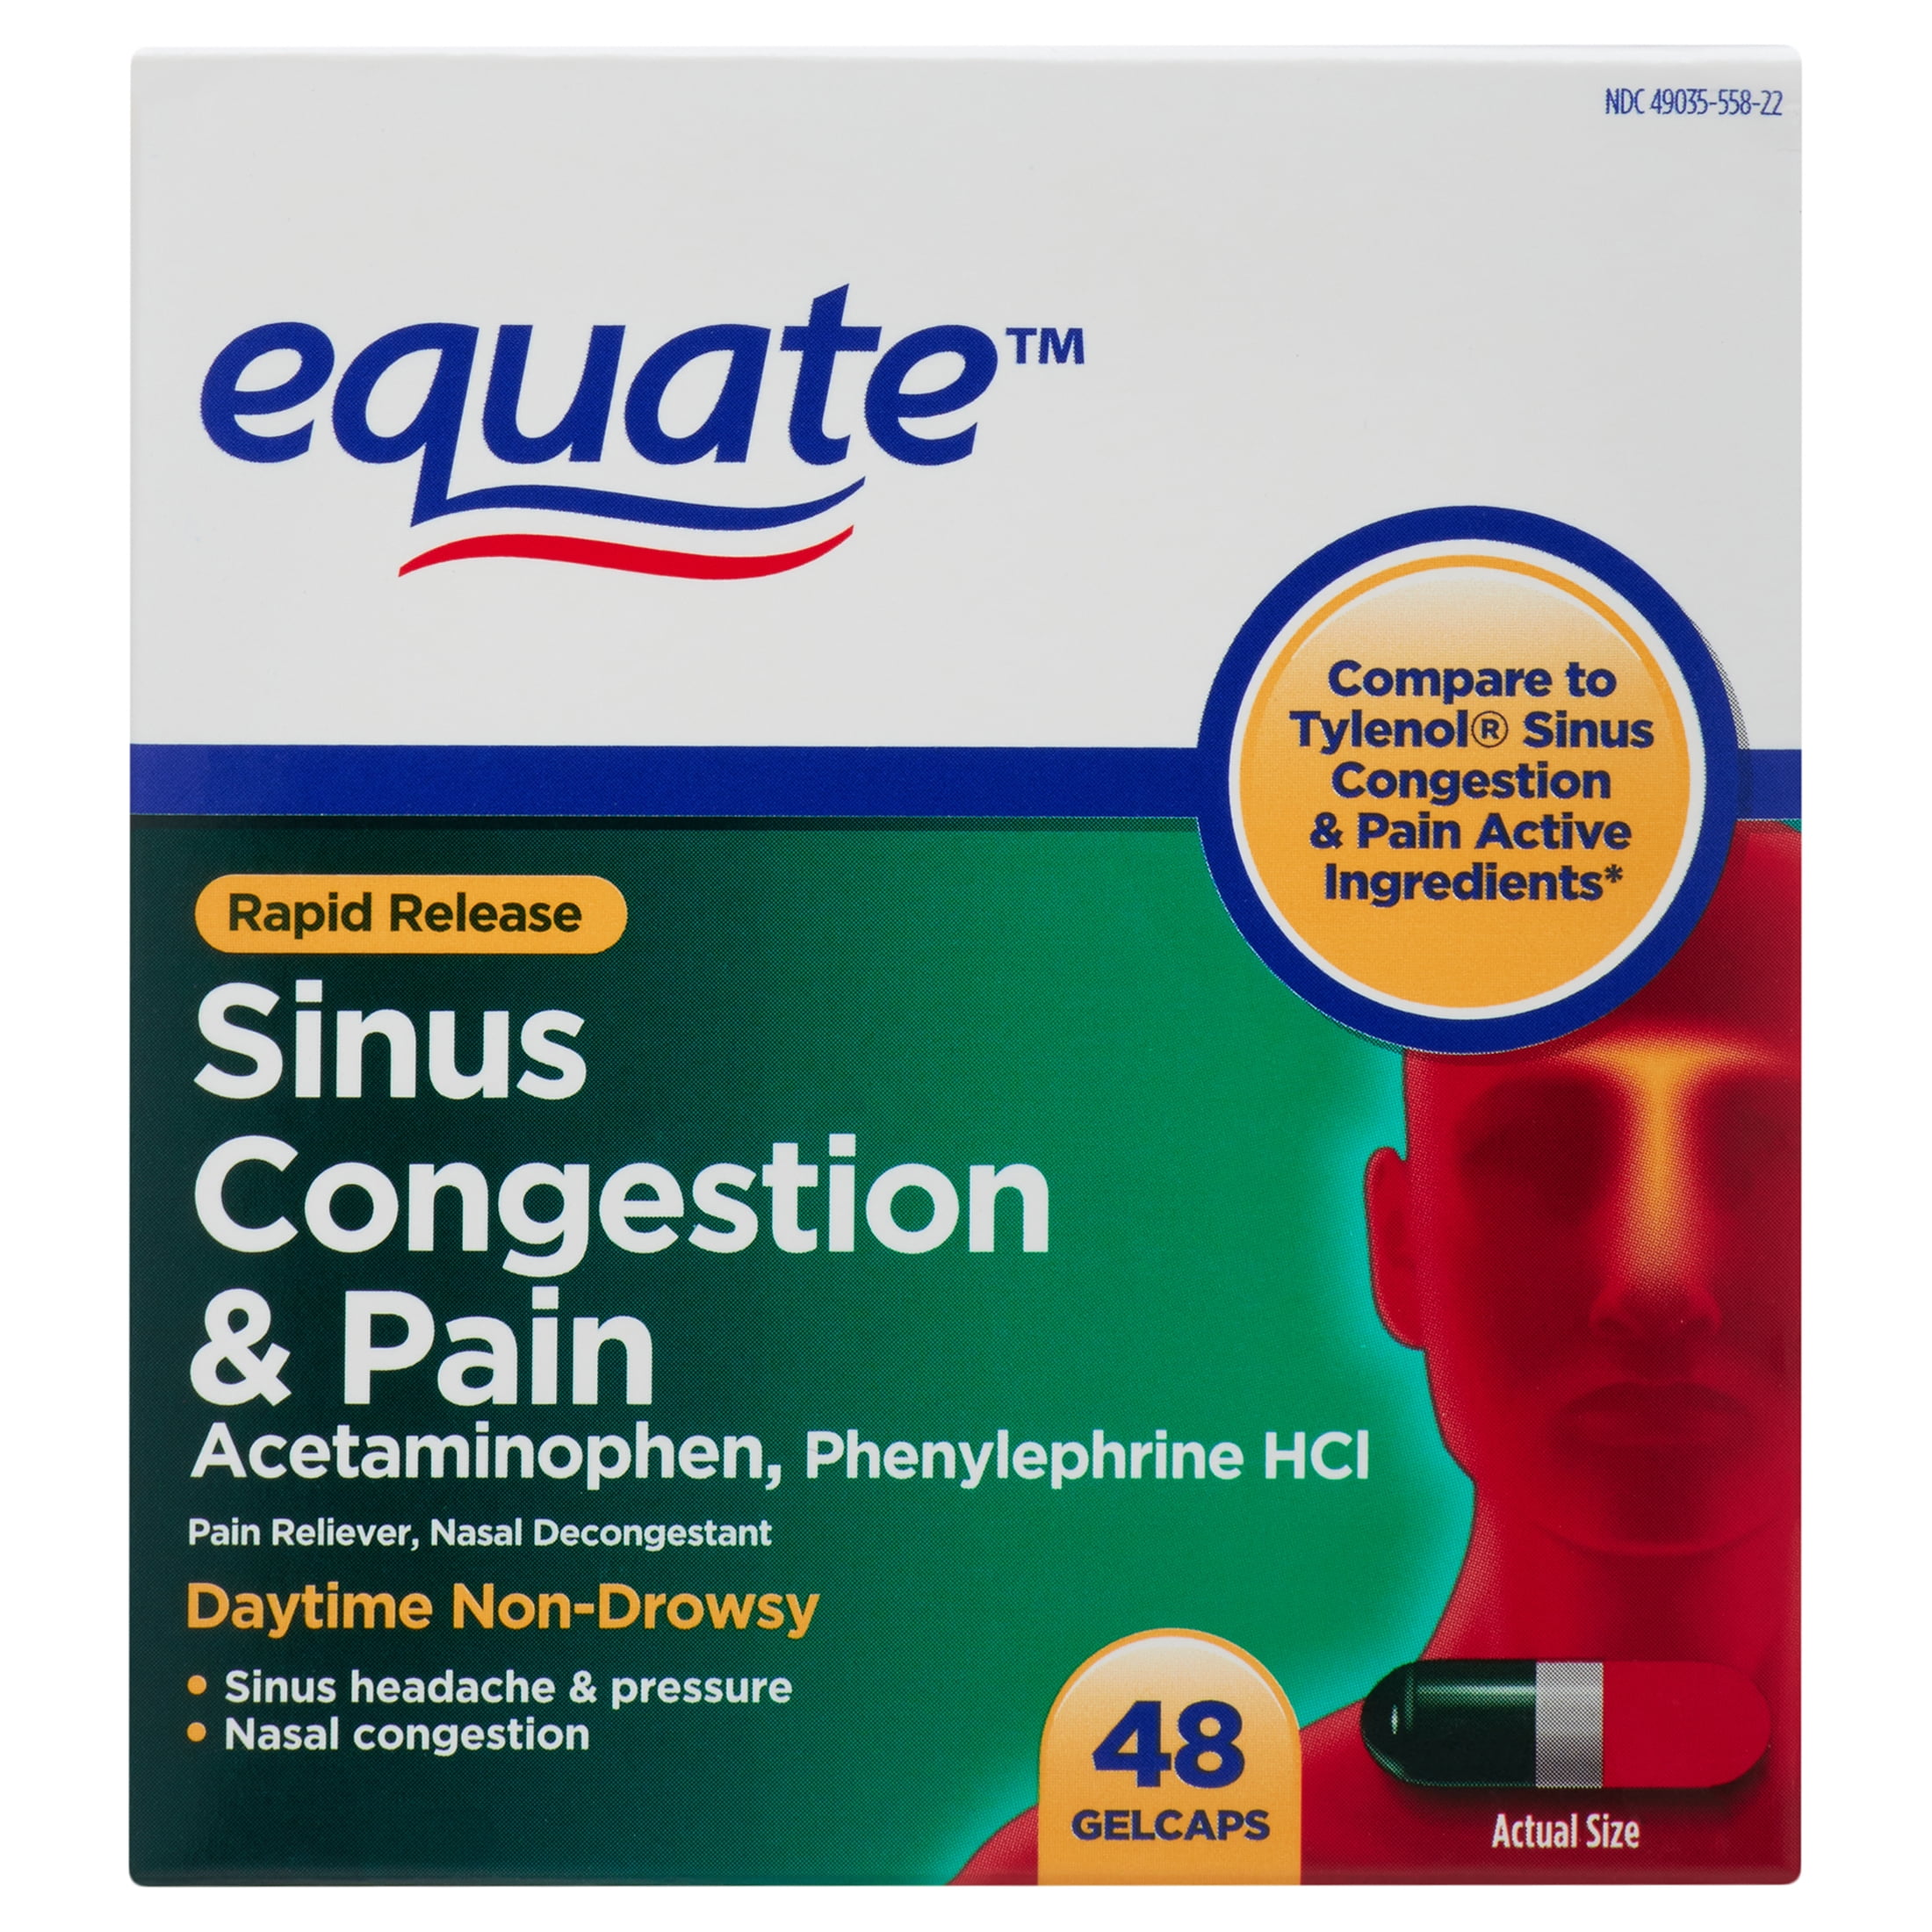 Equate Rapid Release Sinus Congestion & Pain Gelcaps, 48 Count